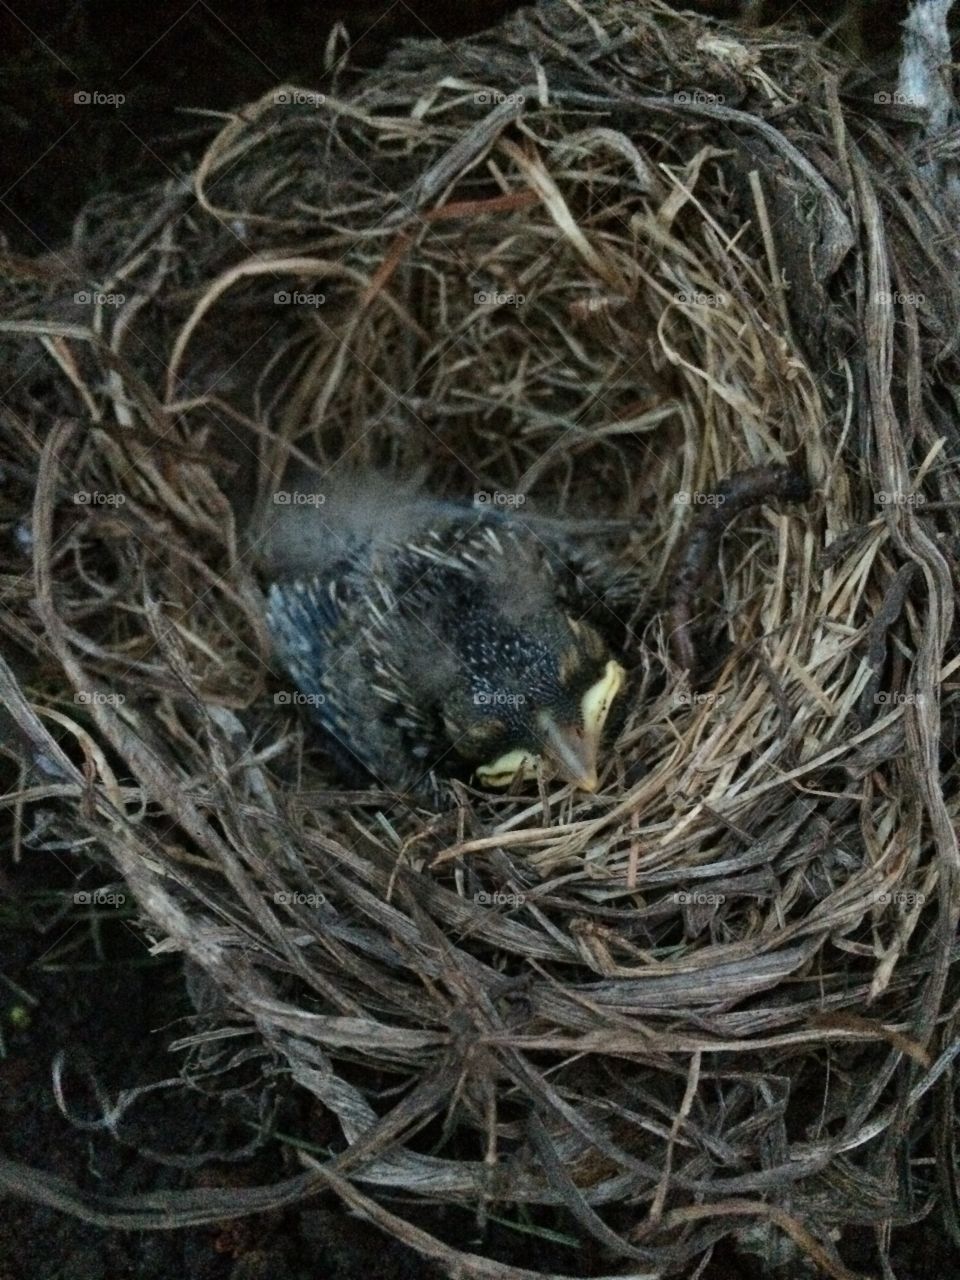 Baby nesting. Baby robin in it's nest